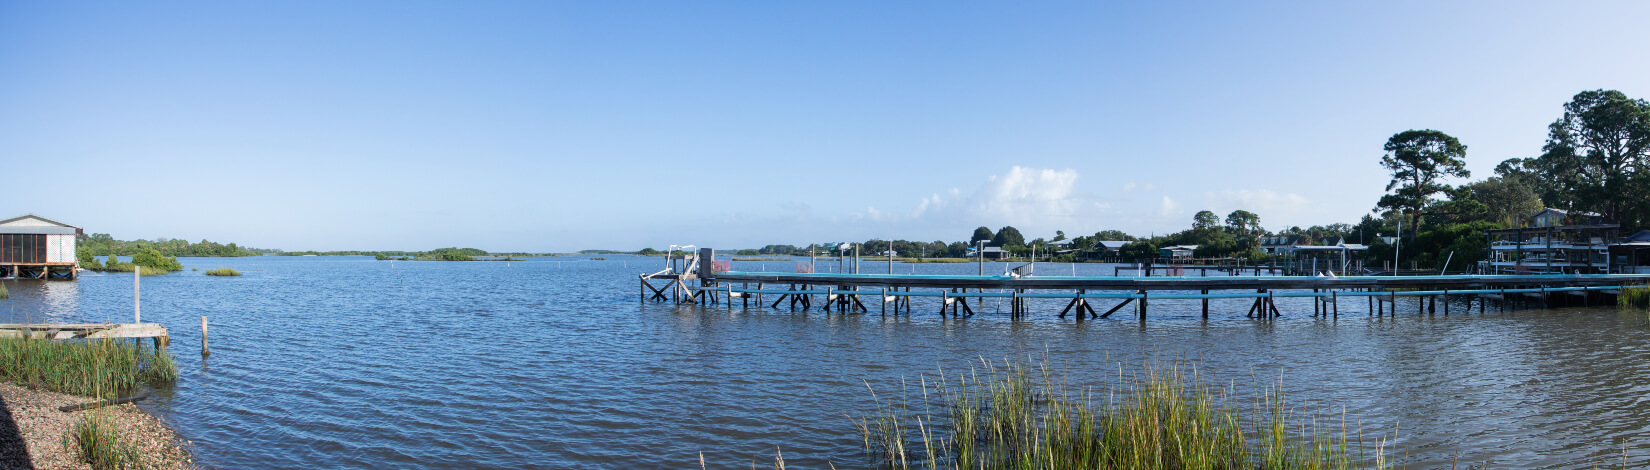 Docks and fisheries in Cedar Key, Florida